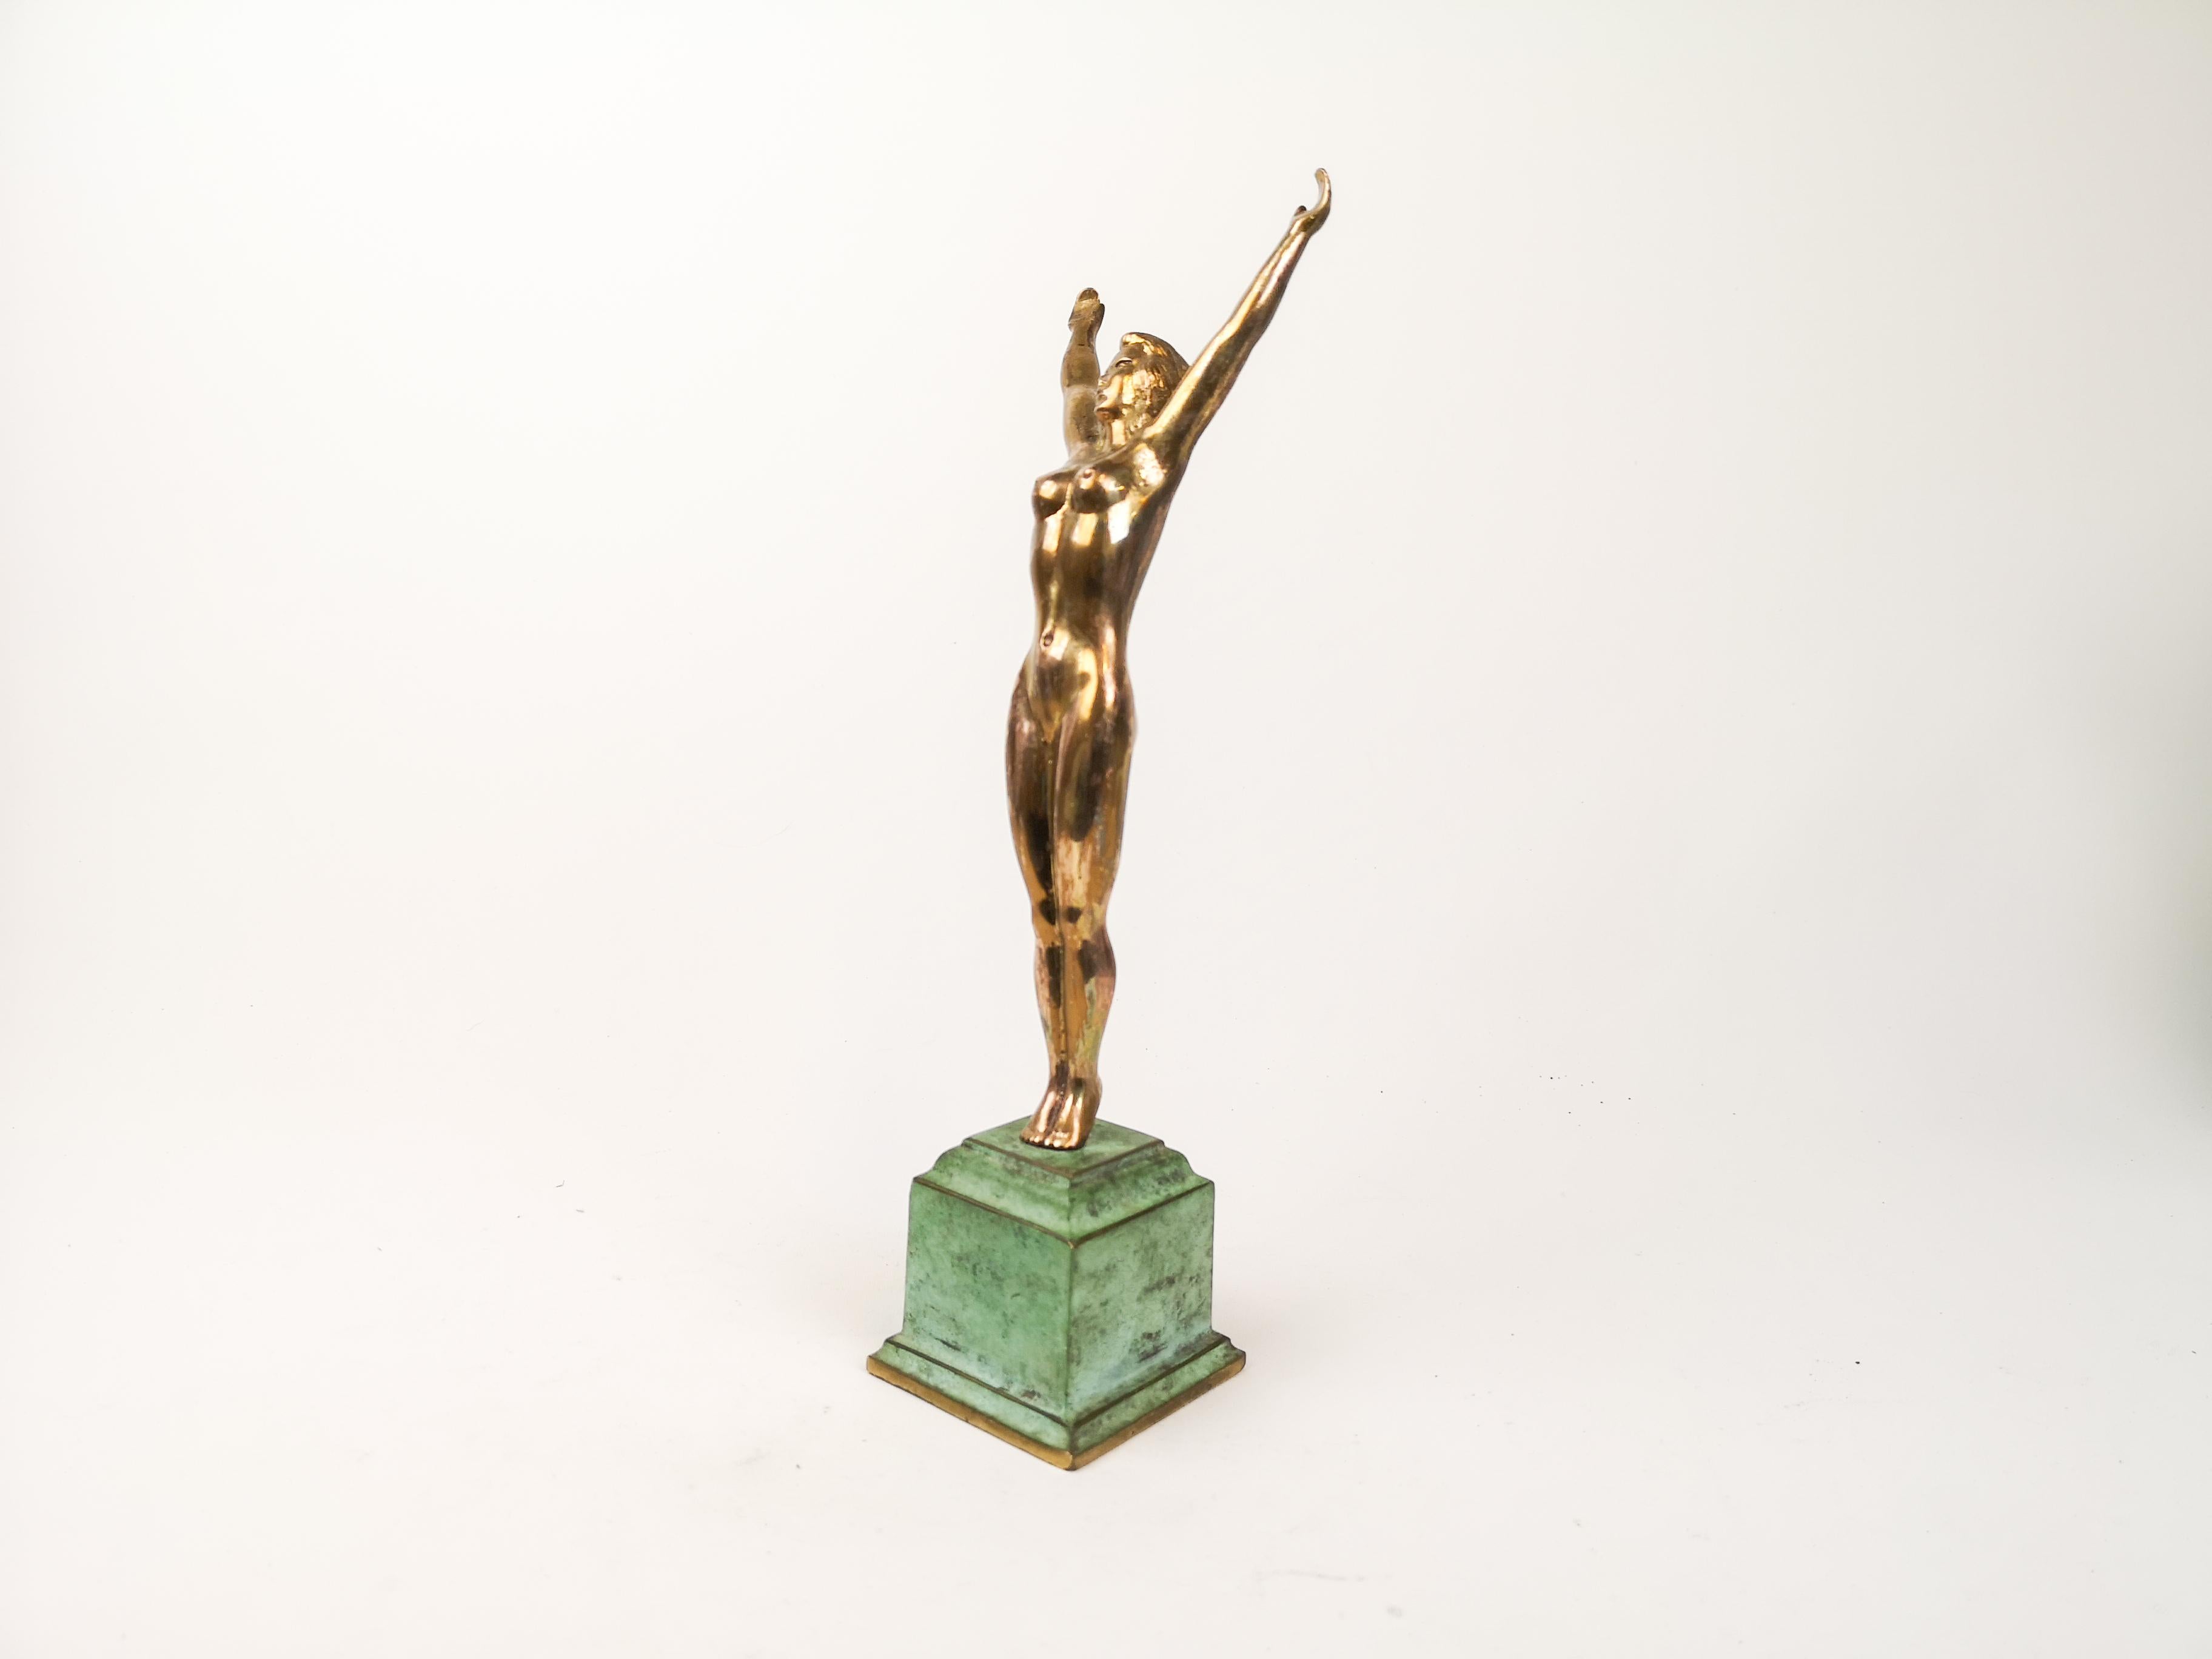 A wonderful brass Art Deco figurine made by Axel Ebbe for P.Ibsens Widow. Ebbe, Axel (1868-1941) Sweden, 